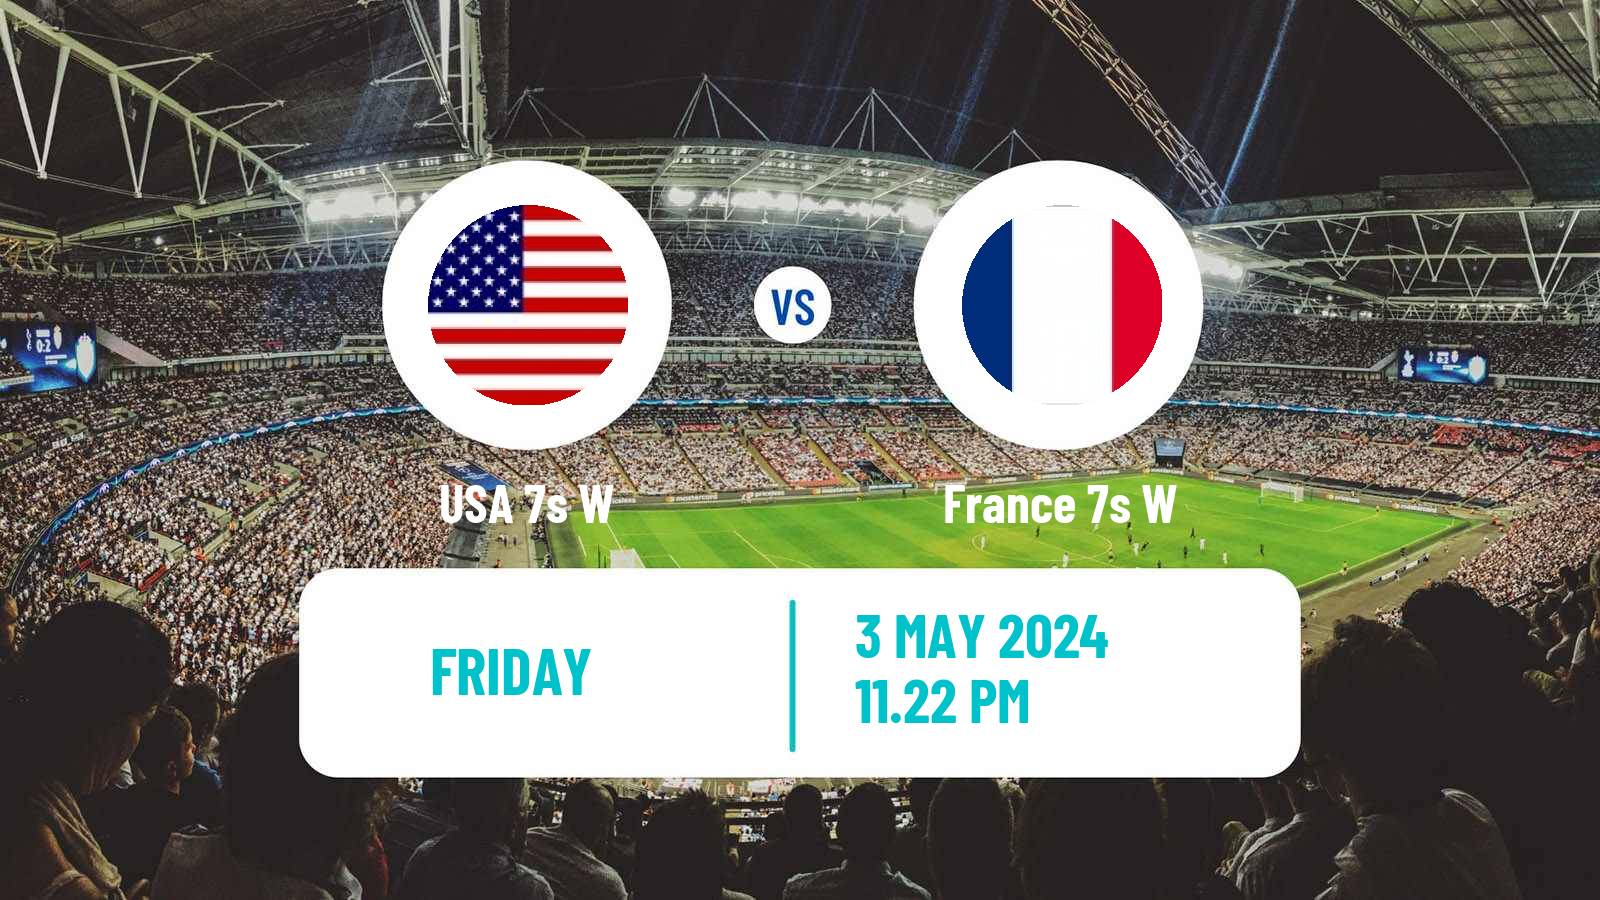 Soccer Sevens World Series Women - Singapore USA 7s W - France 7s W